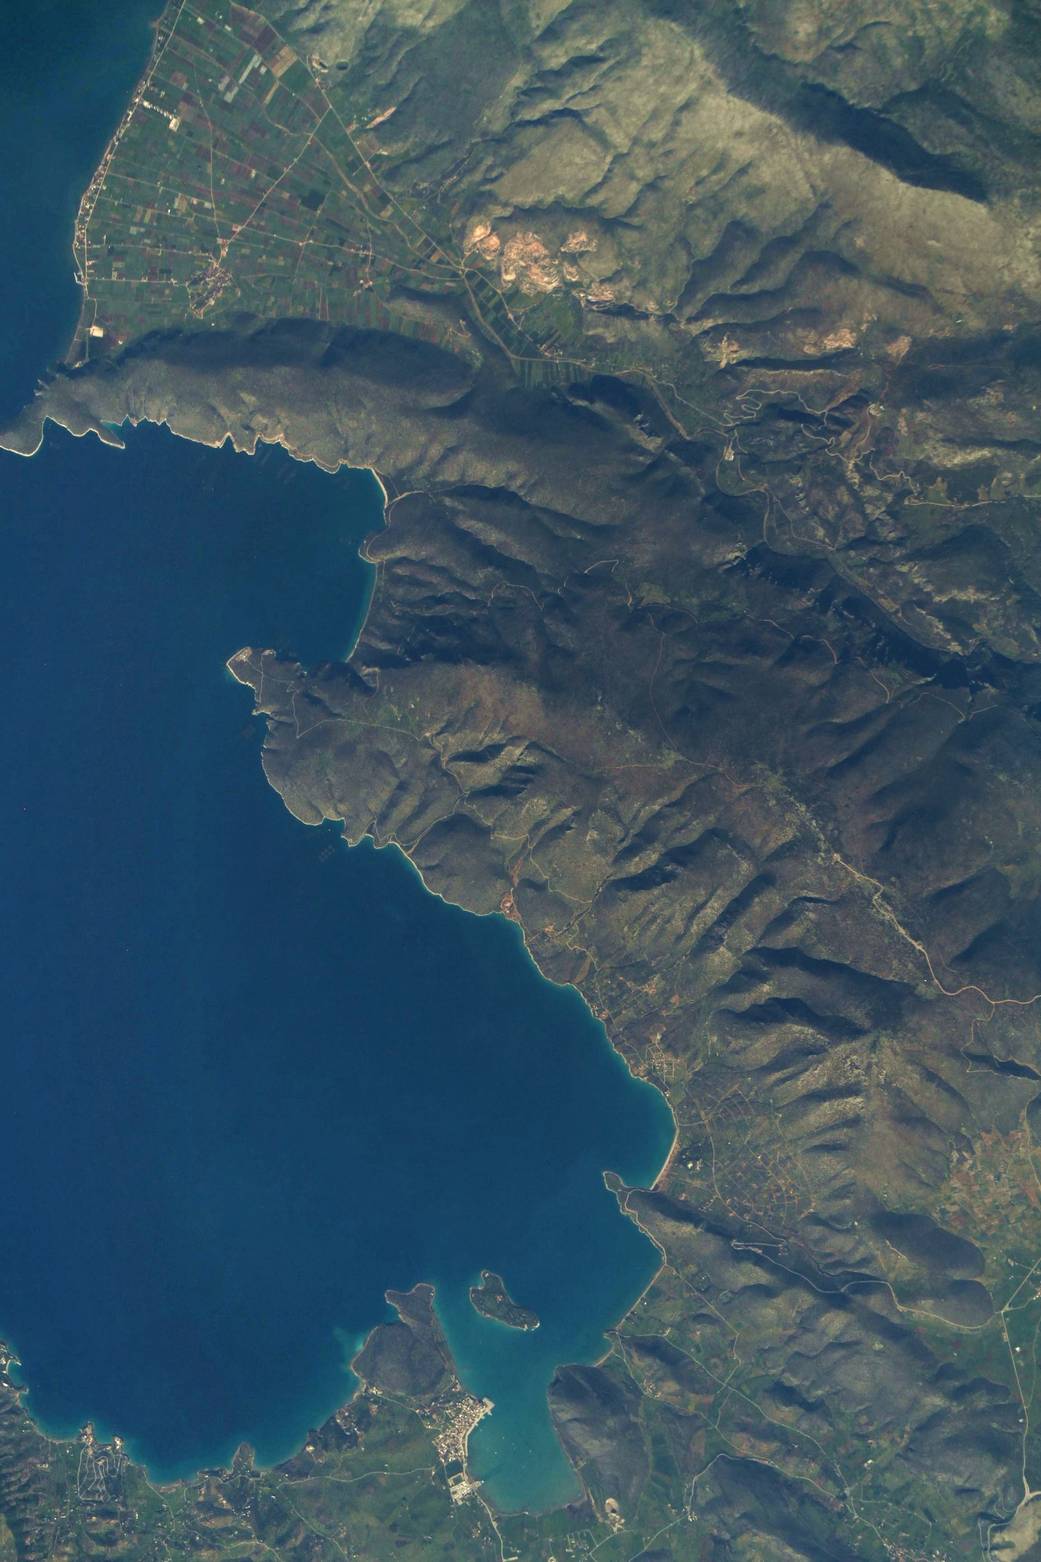 The Argolic Gulf of the Peloponnese